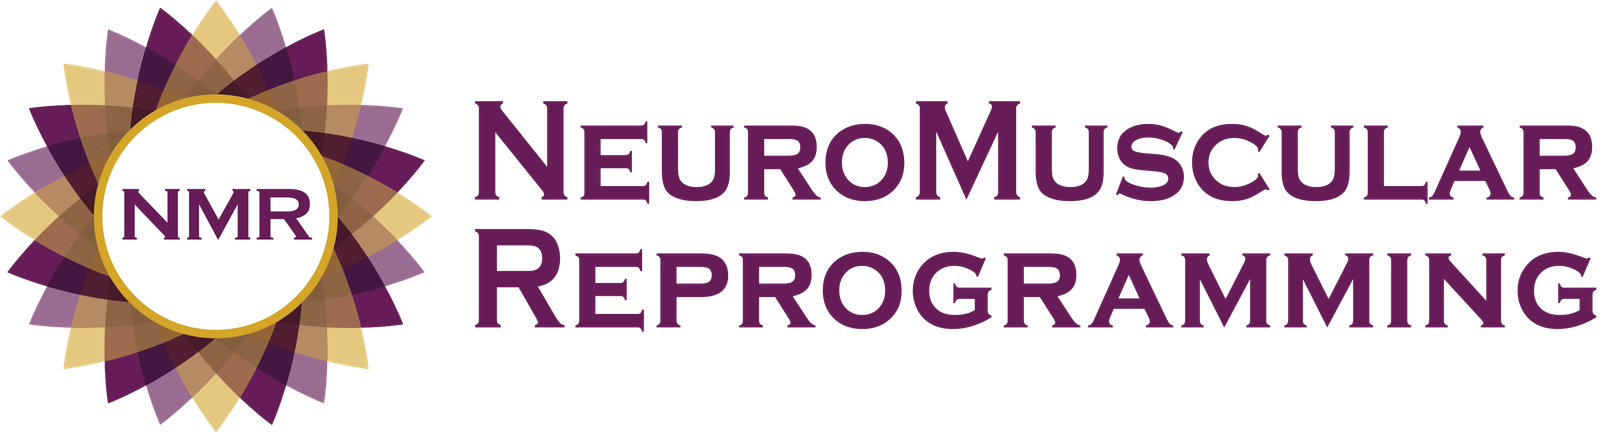 NeuroMuscular Reprograming